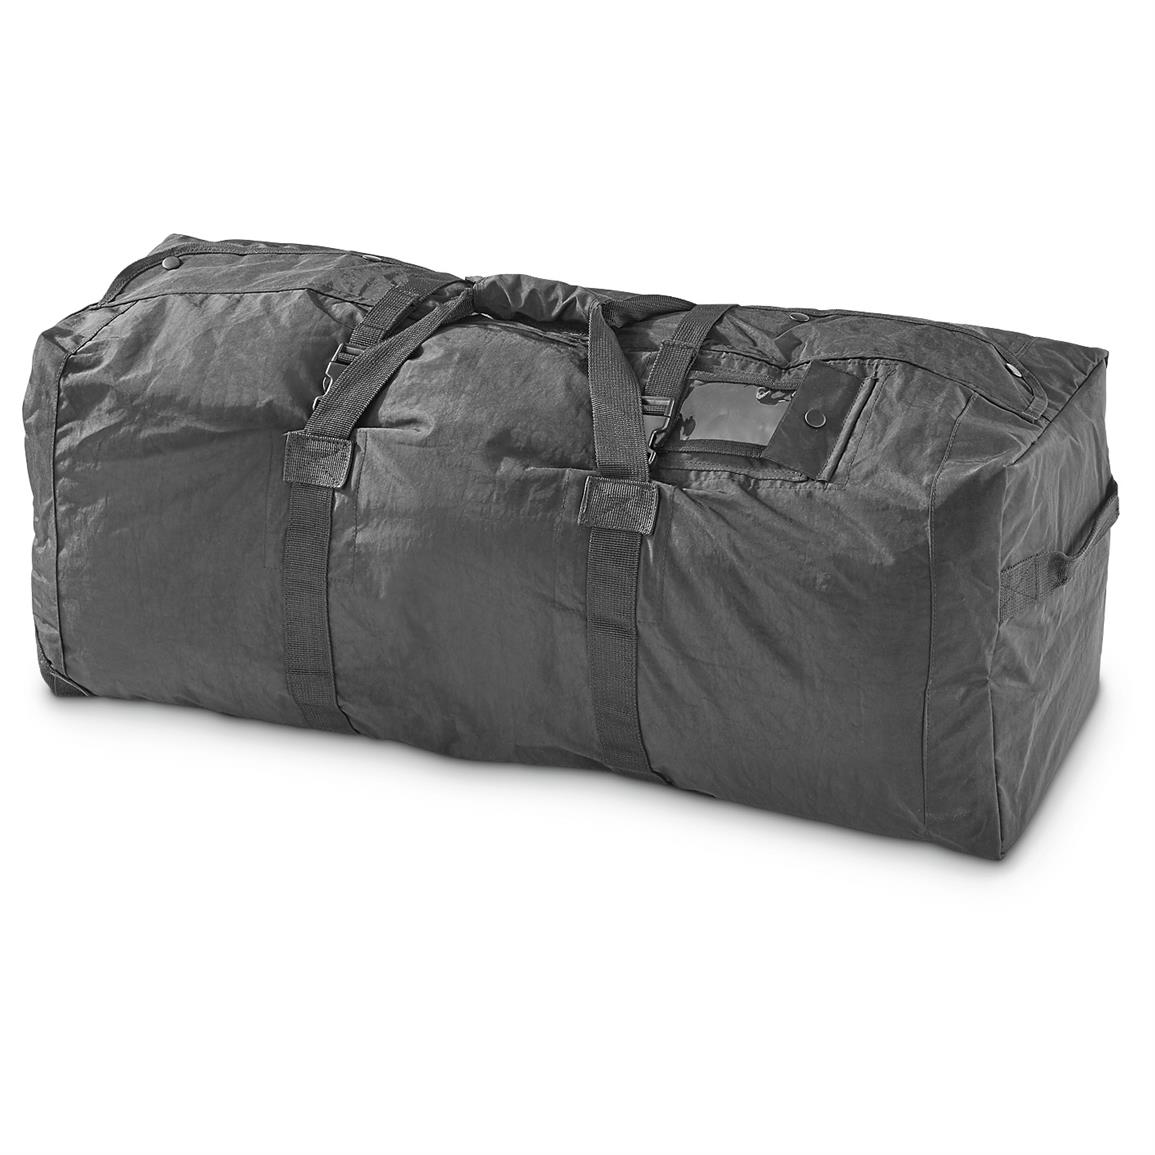 U.S. Military Surplus Duffel Bag, New - 641290, Military & Camo Duffle Bags at Sportsman&#39;s Guide